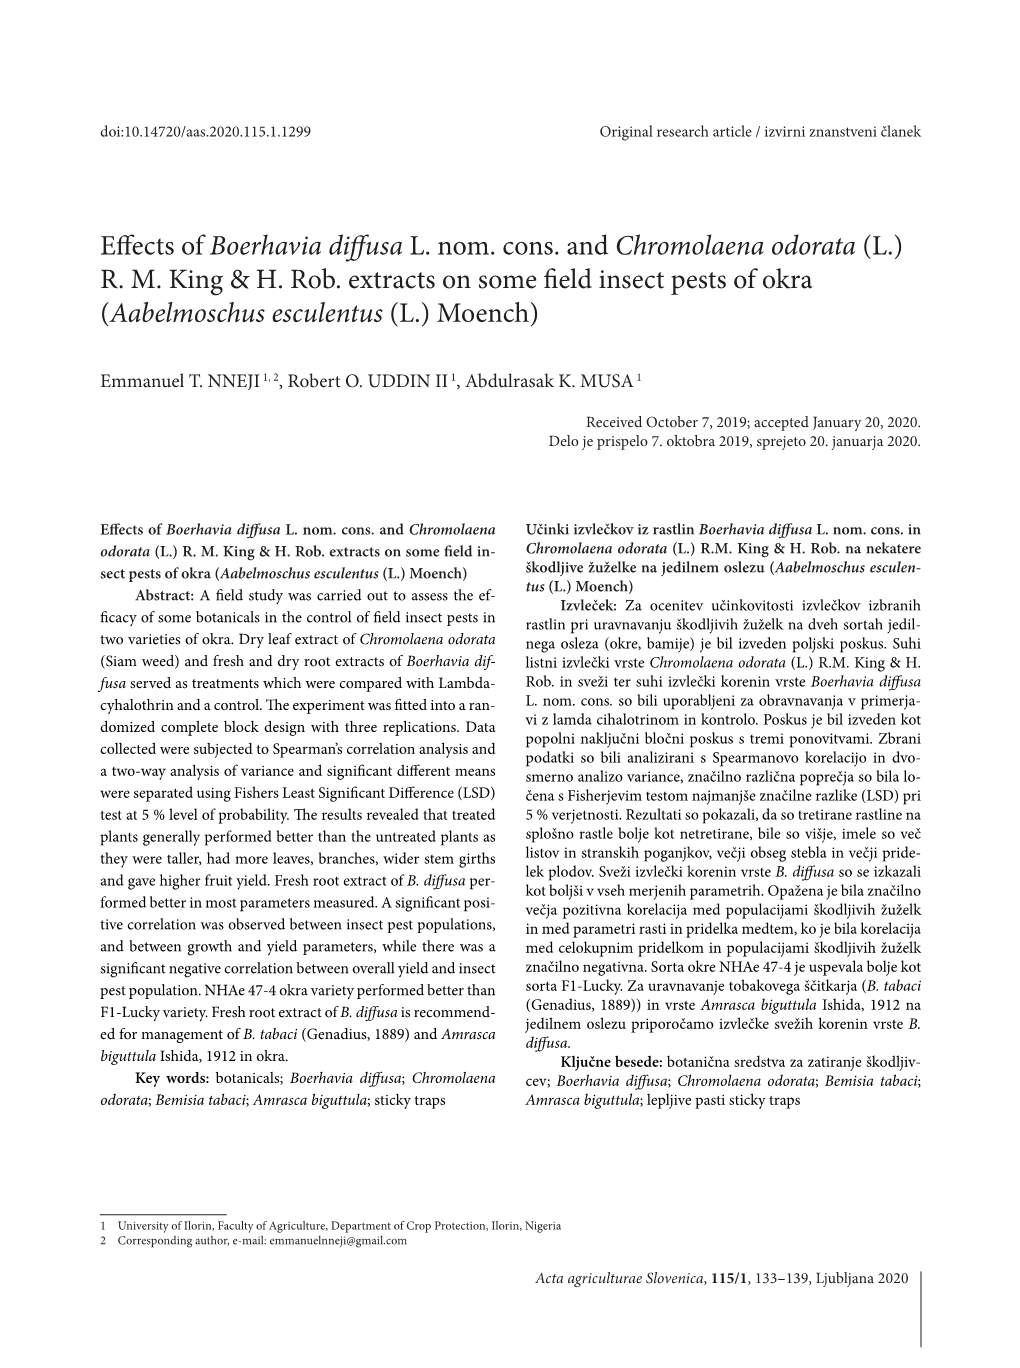 Effects of Boerhavia Diffusa L. Nom. Cons. and Chromolaena Odorata (L.) R